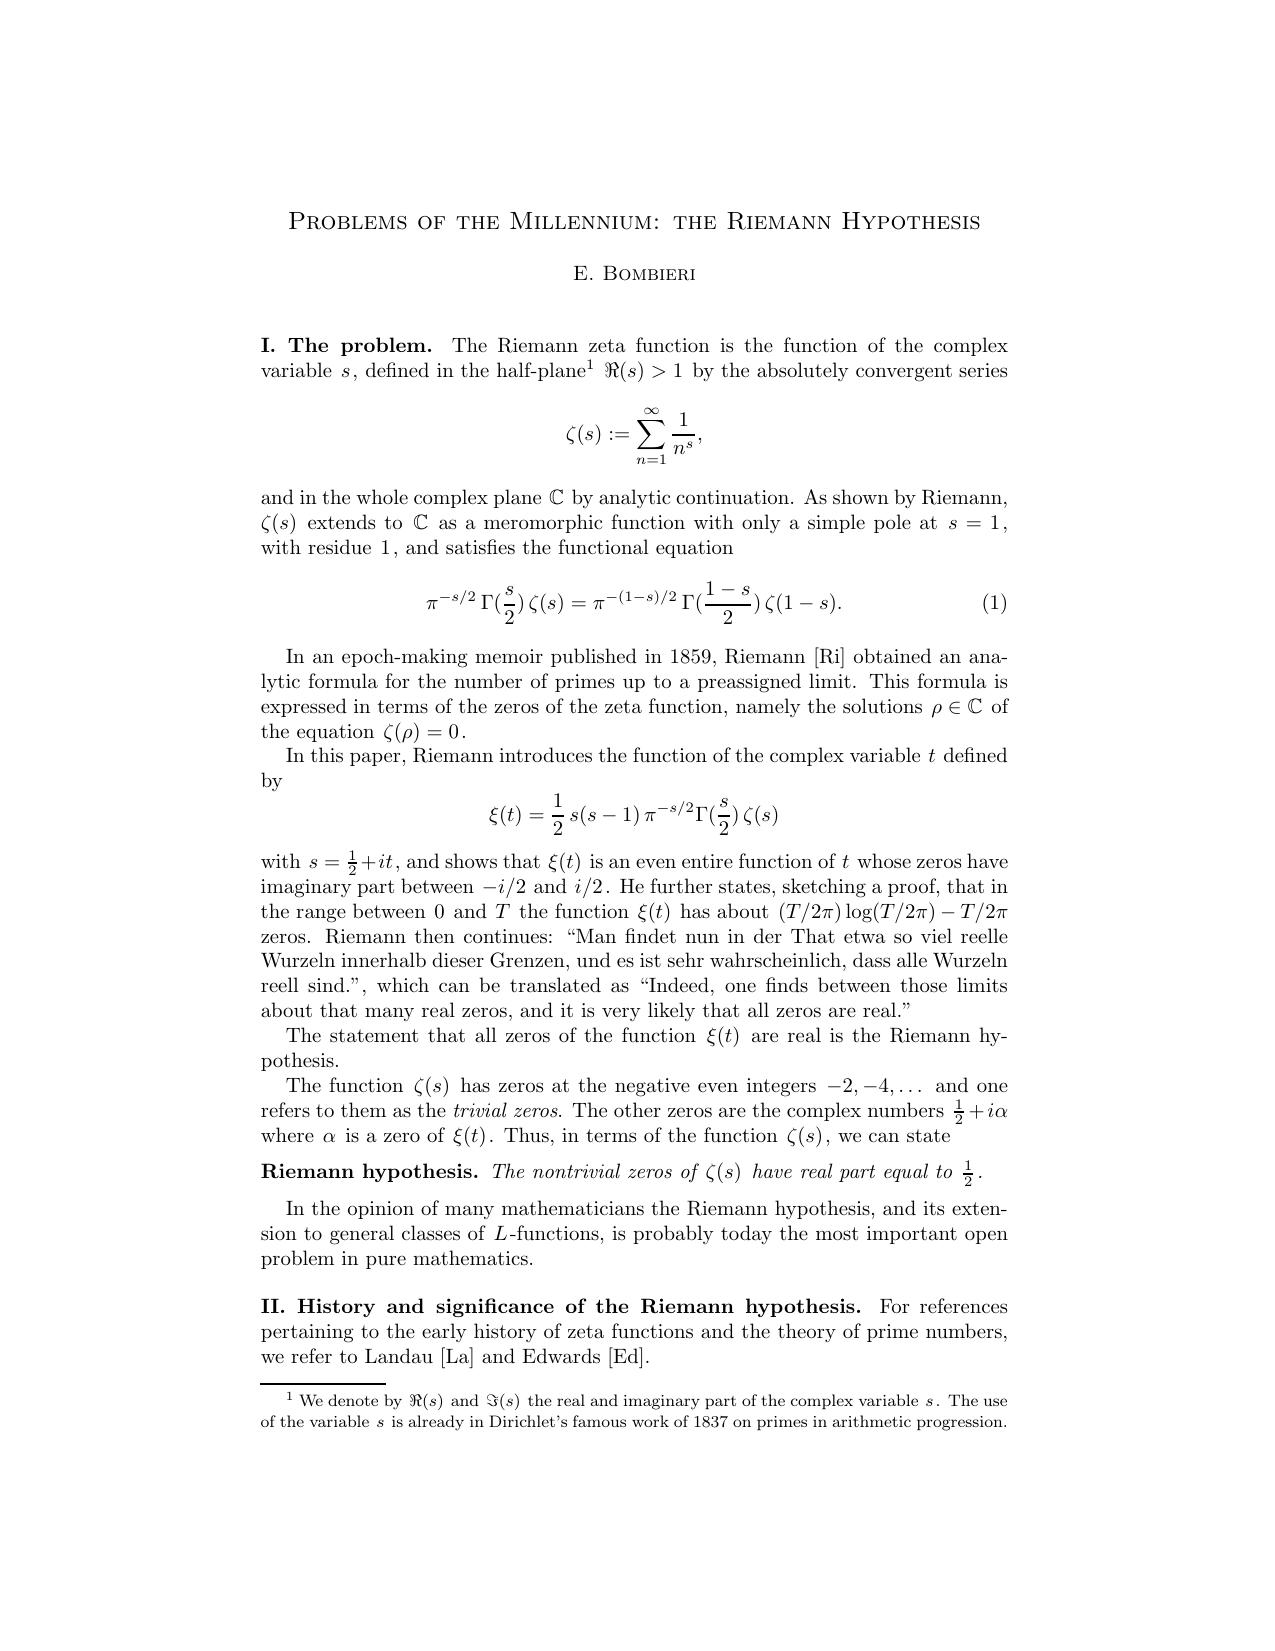 Problems of the Millenium - The Riemann Hypothesis - Essay